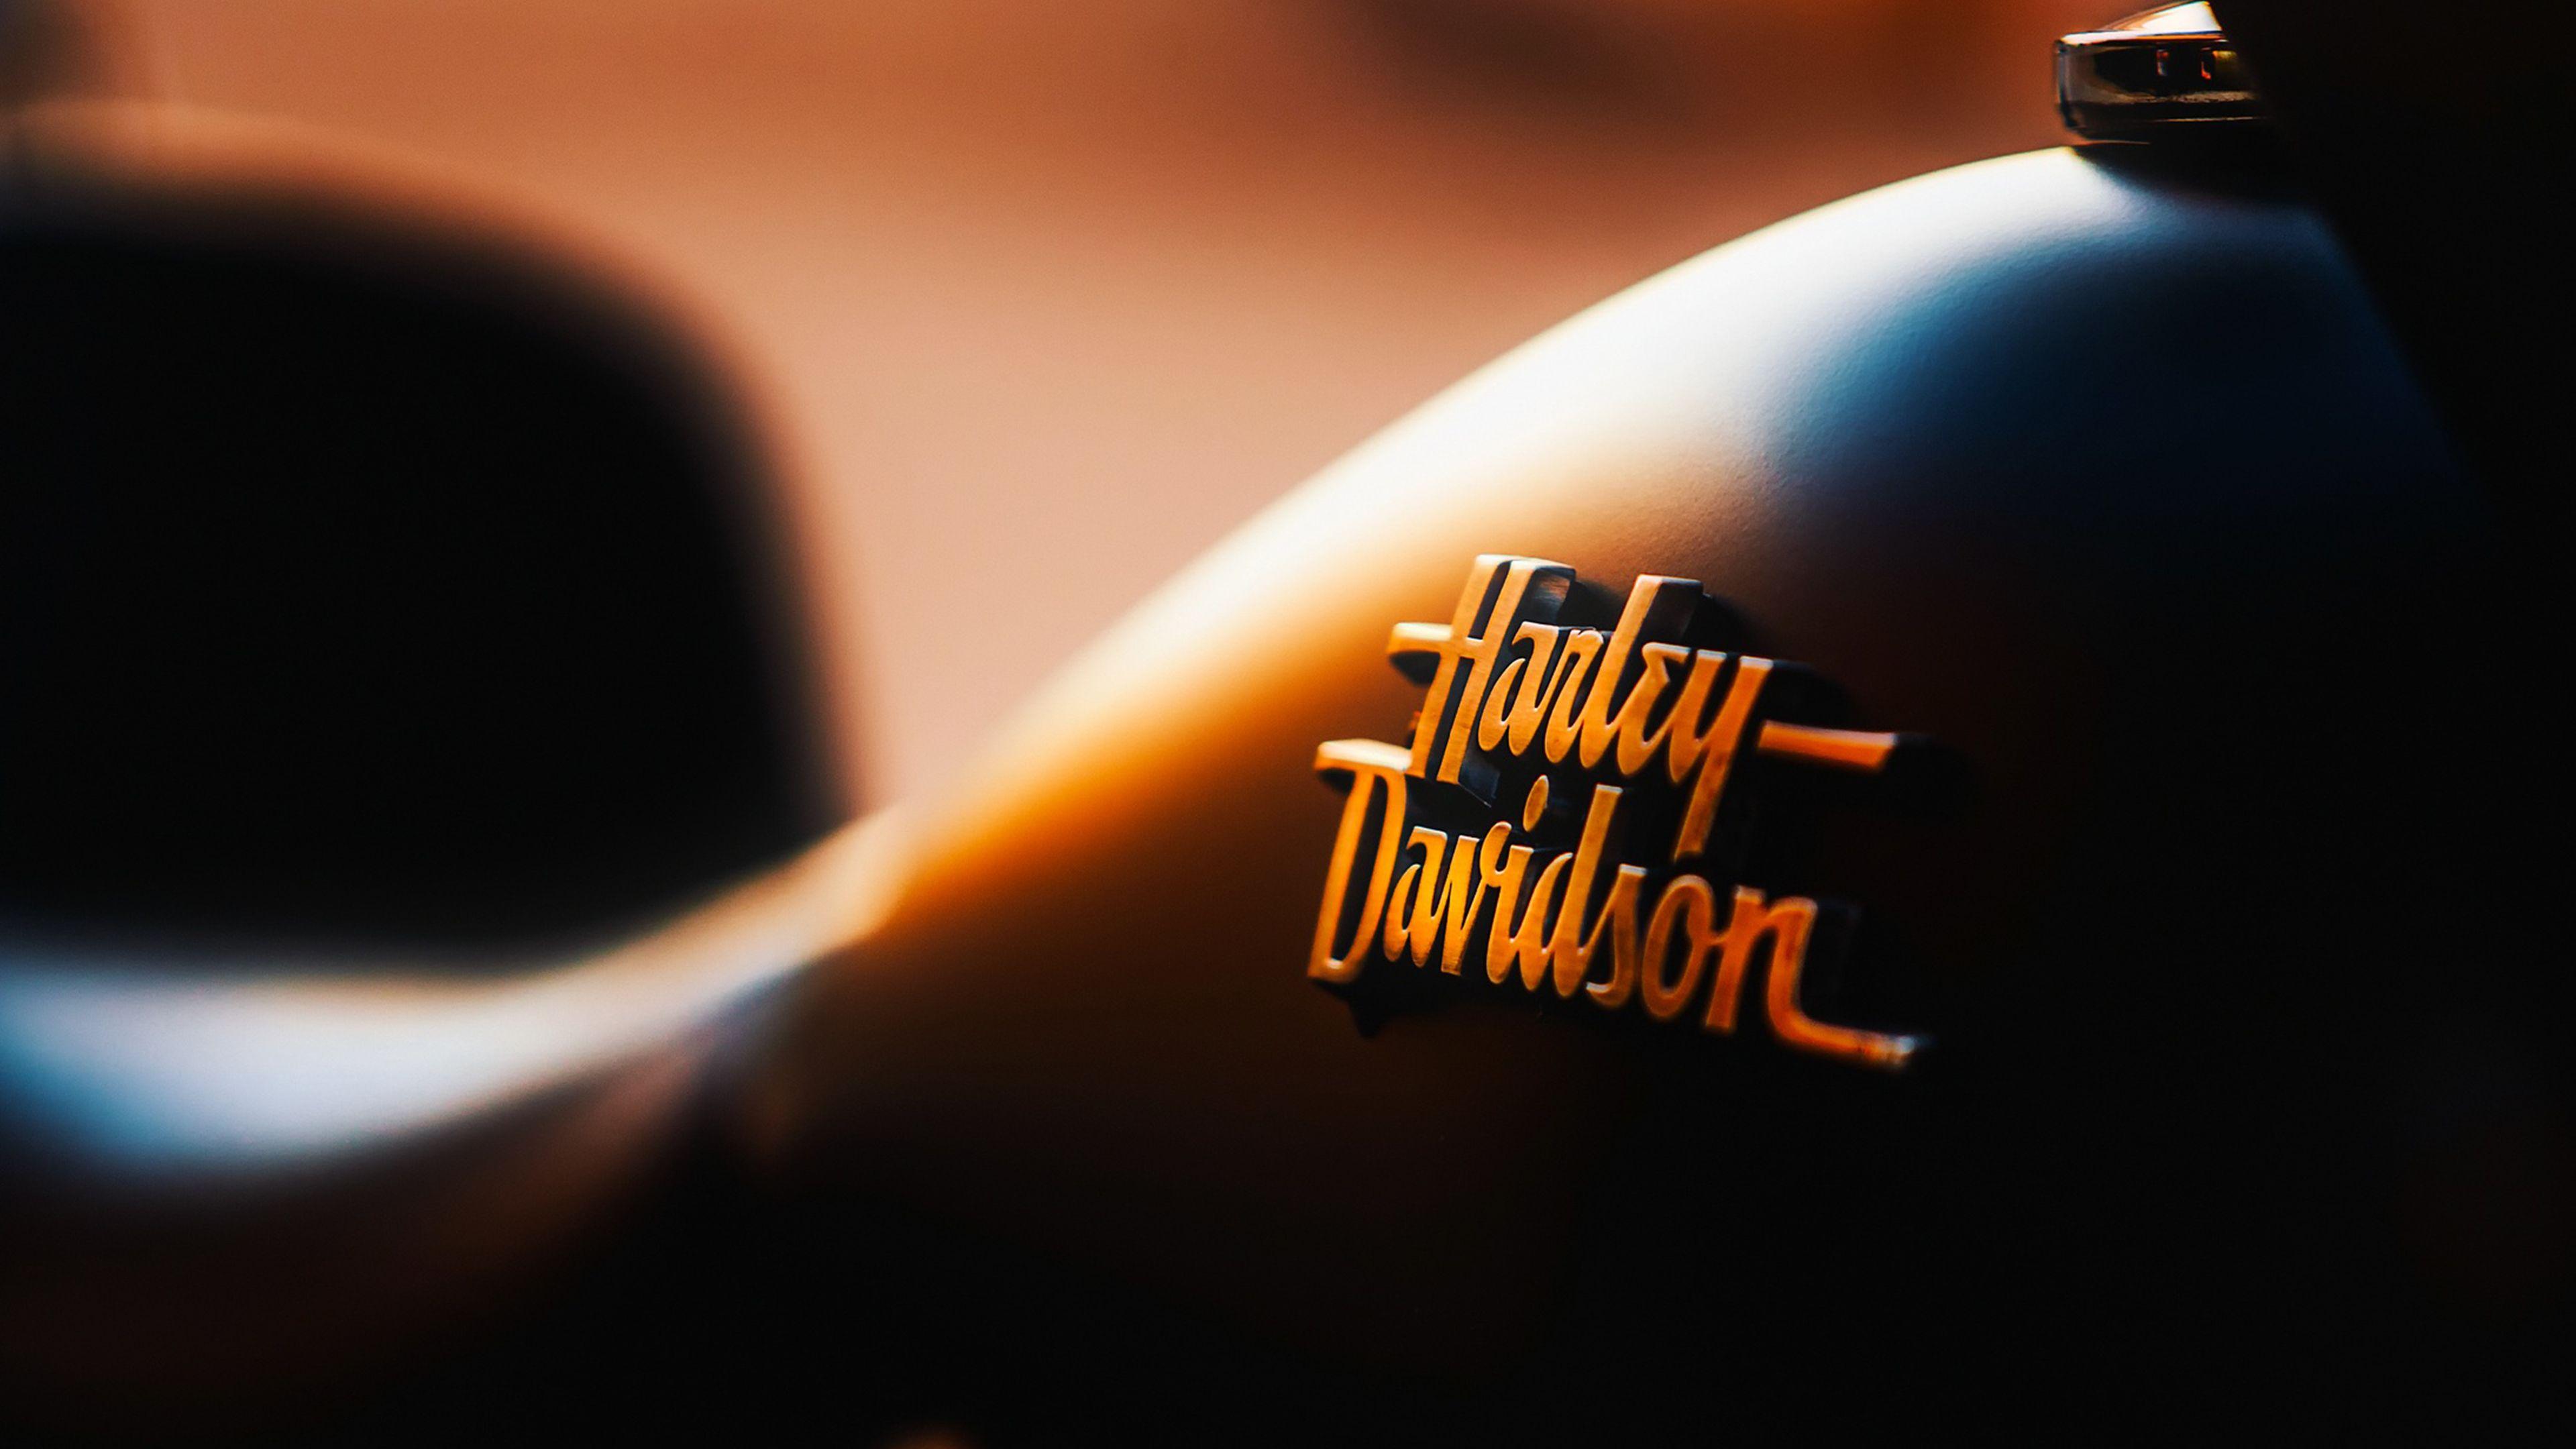 Harley Davidson Bike Logo Wallpaper Background HD 62960 3840x2160 px